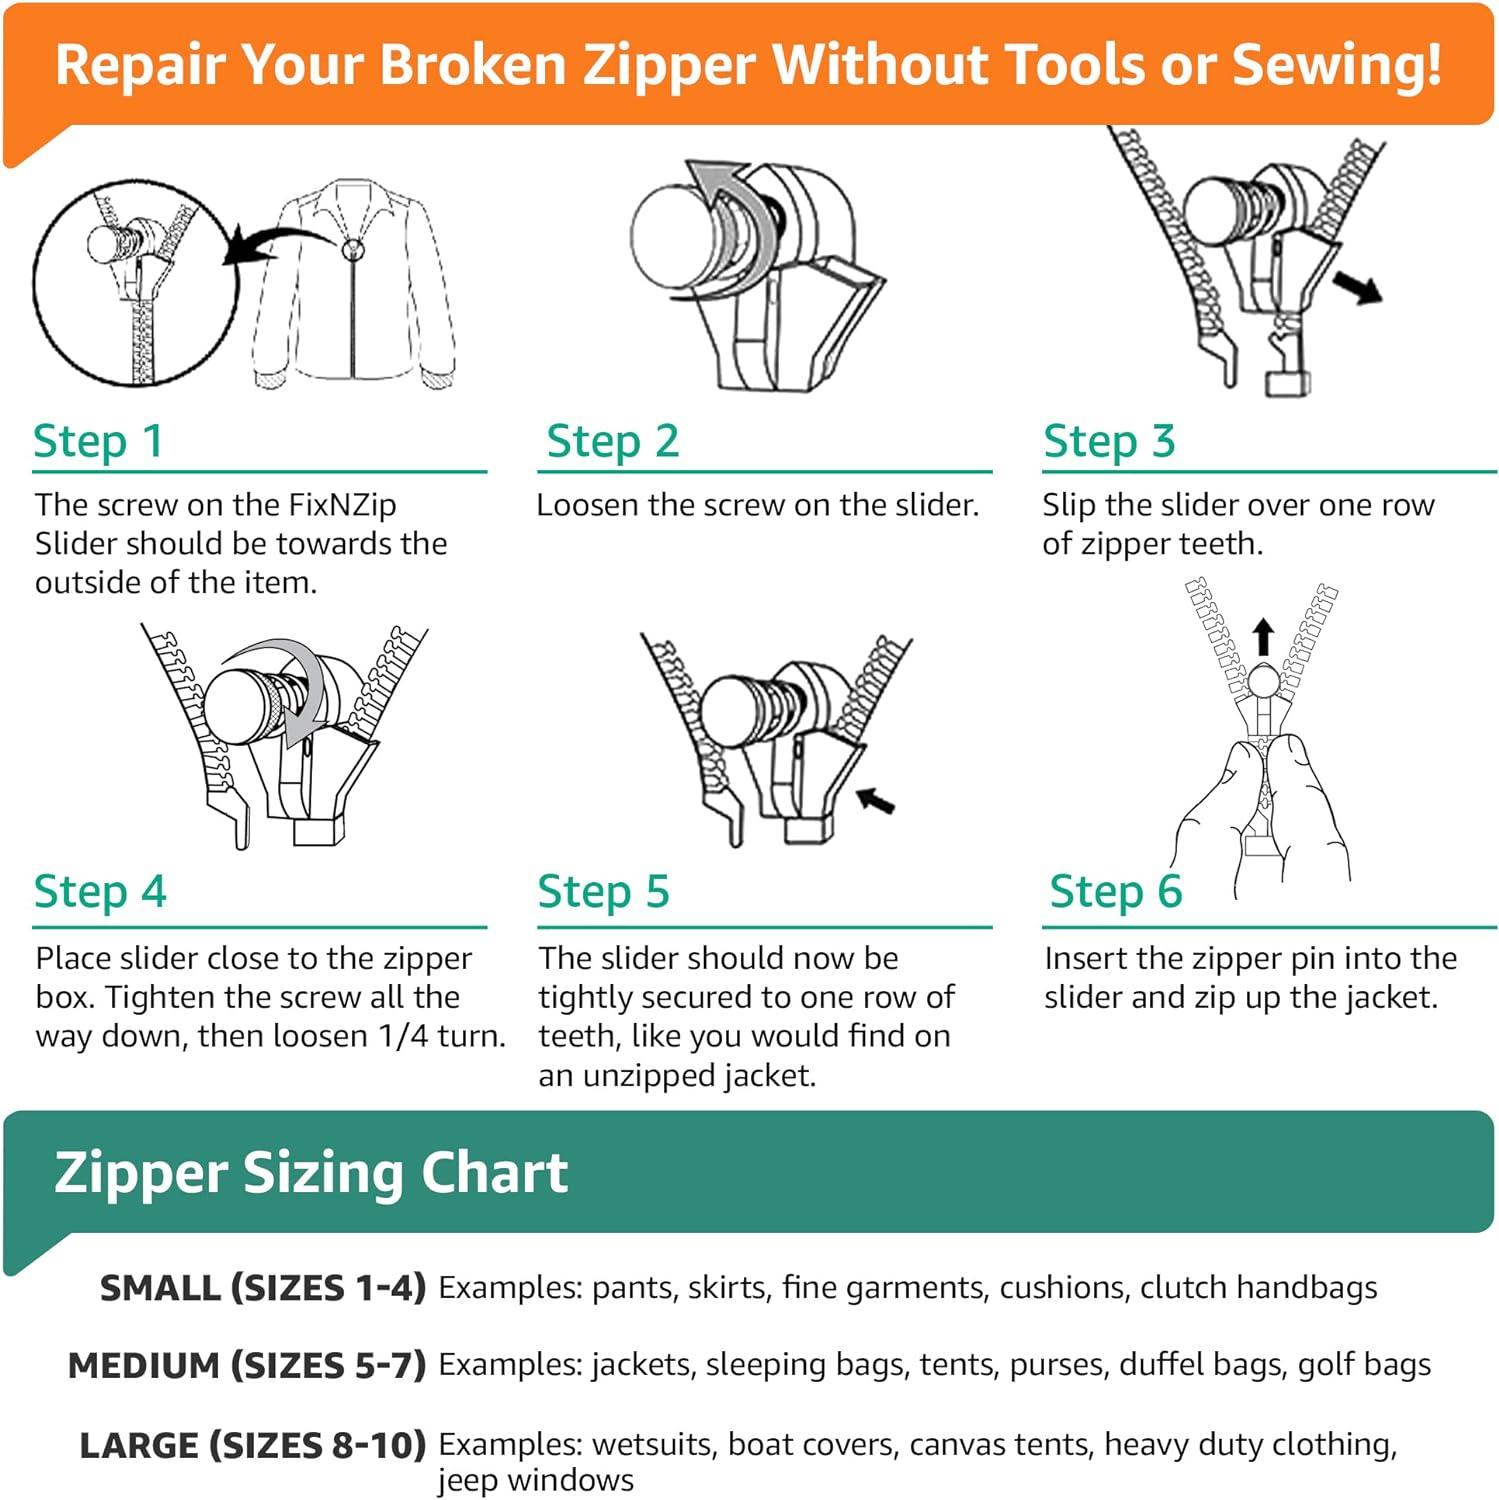 Tips for Repairing a Broken Zipper on Your Motorcycle Gear